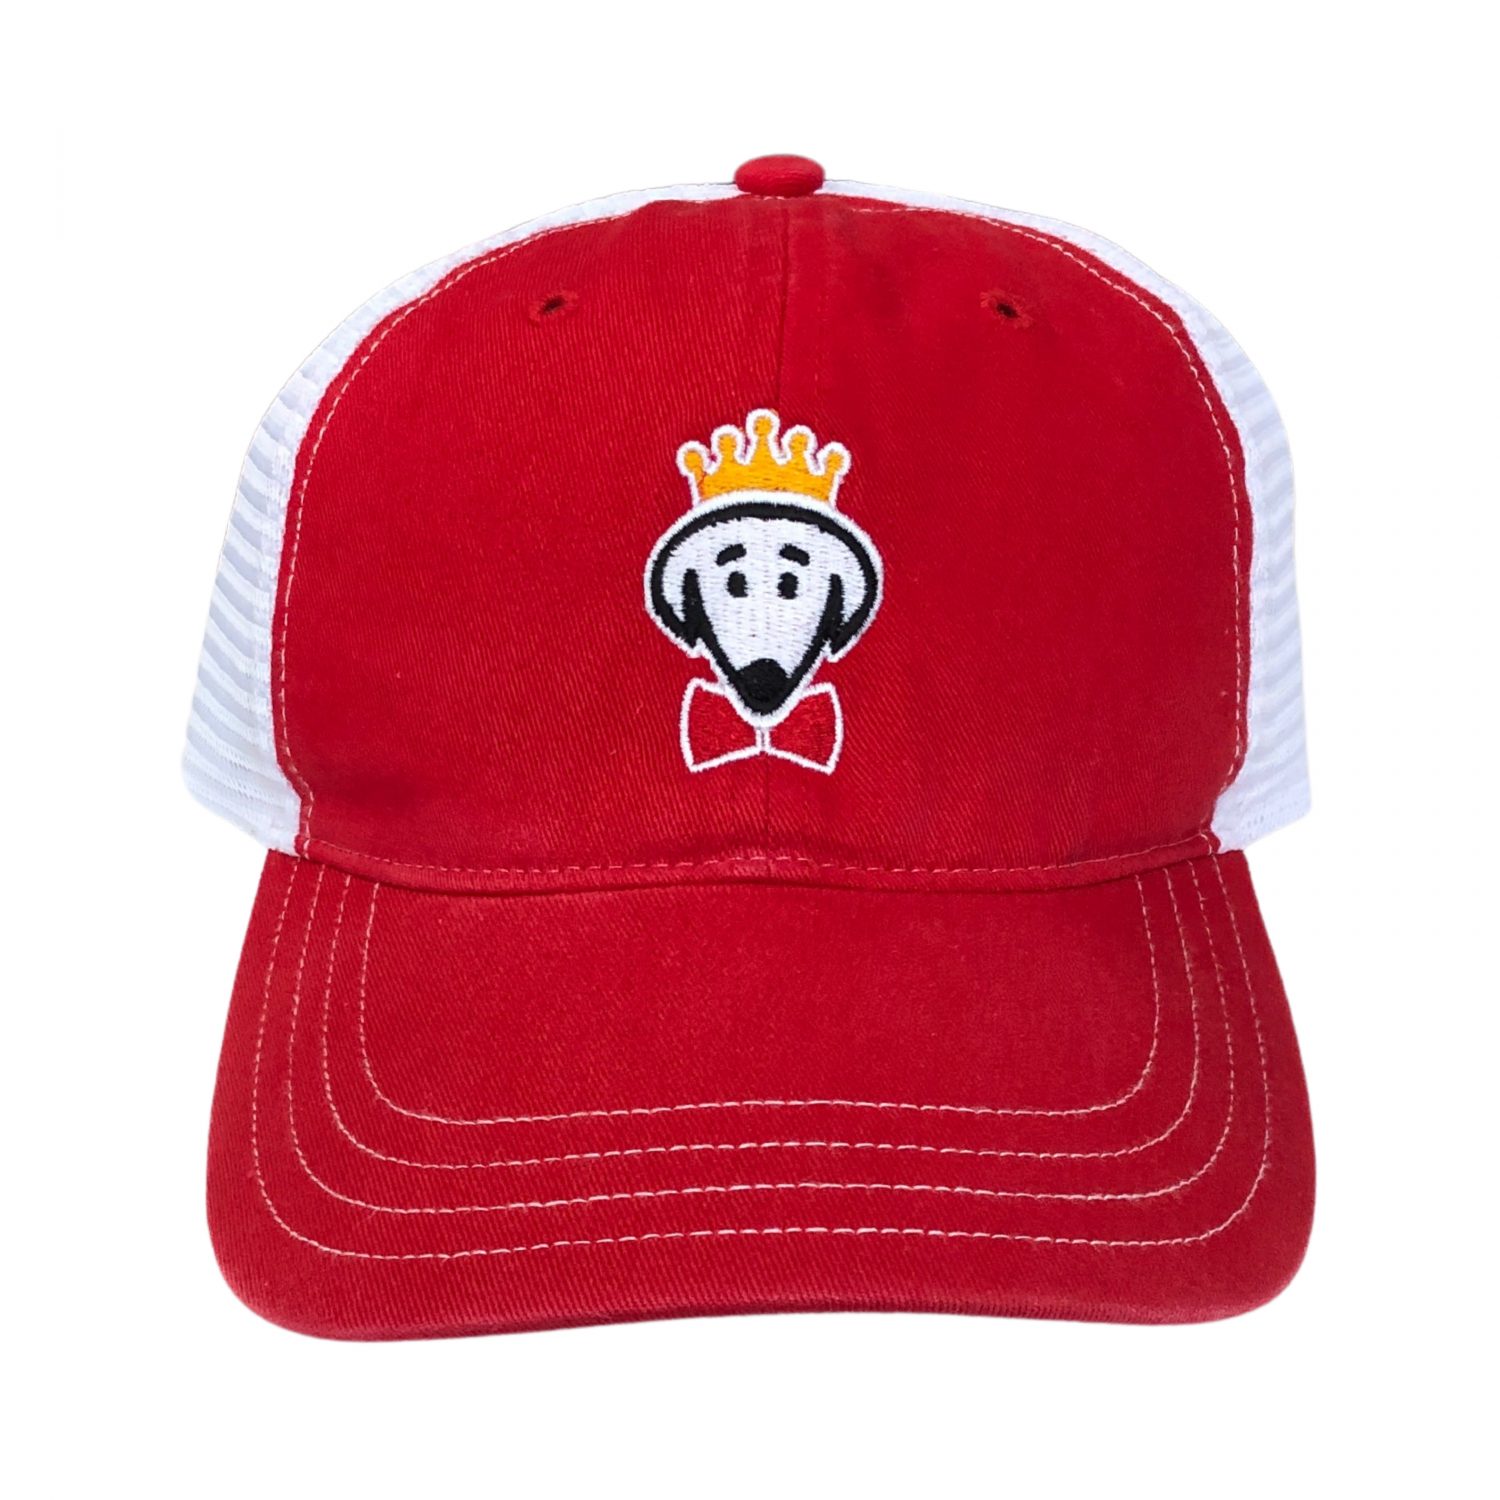 Beau Tyler crown baseball hat red